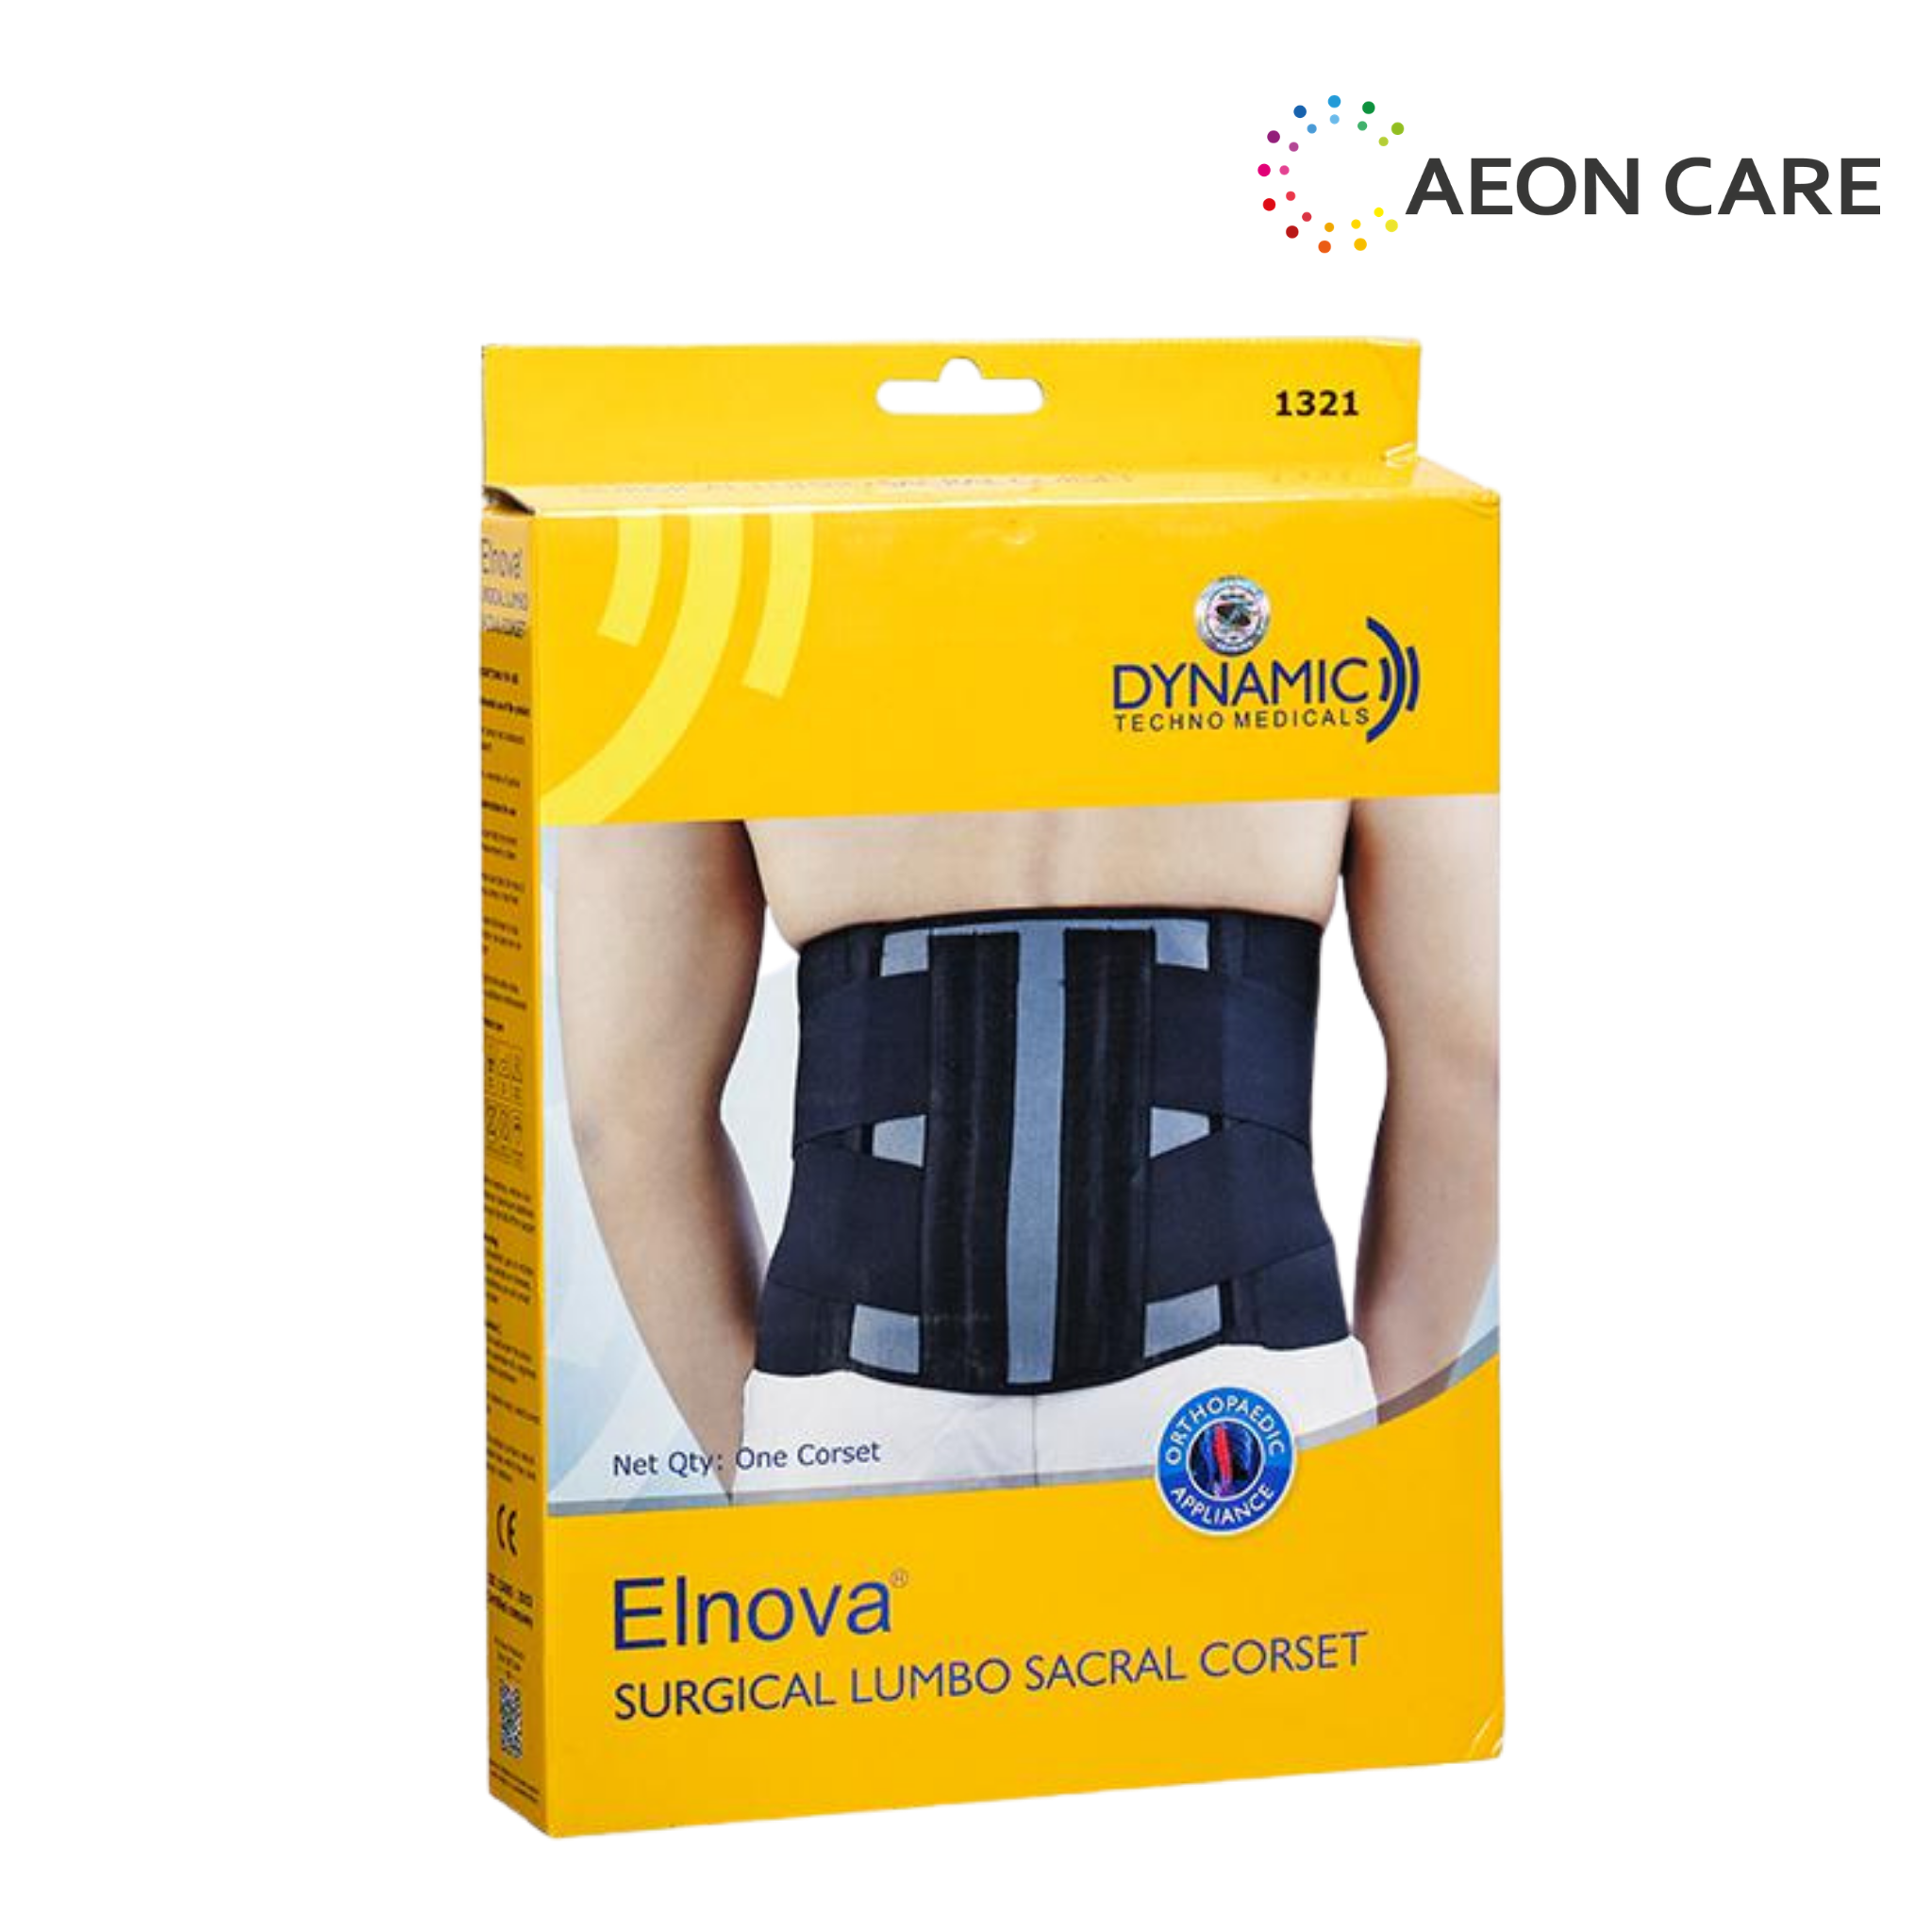 Elnova Surgical Lumbo Sacral Corset - Back Pain Belt